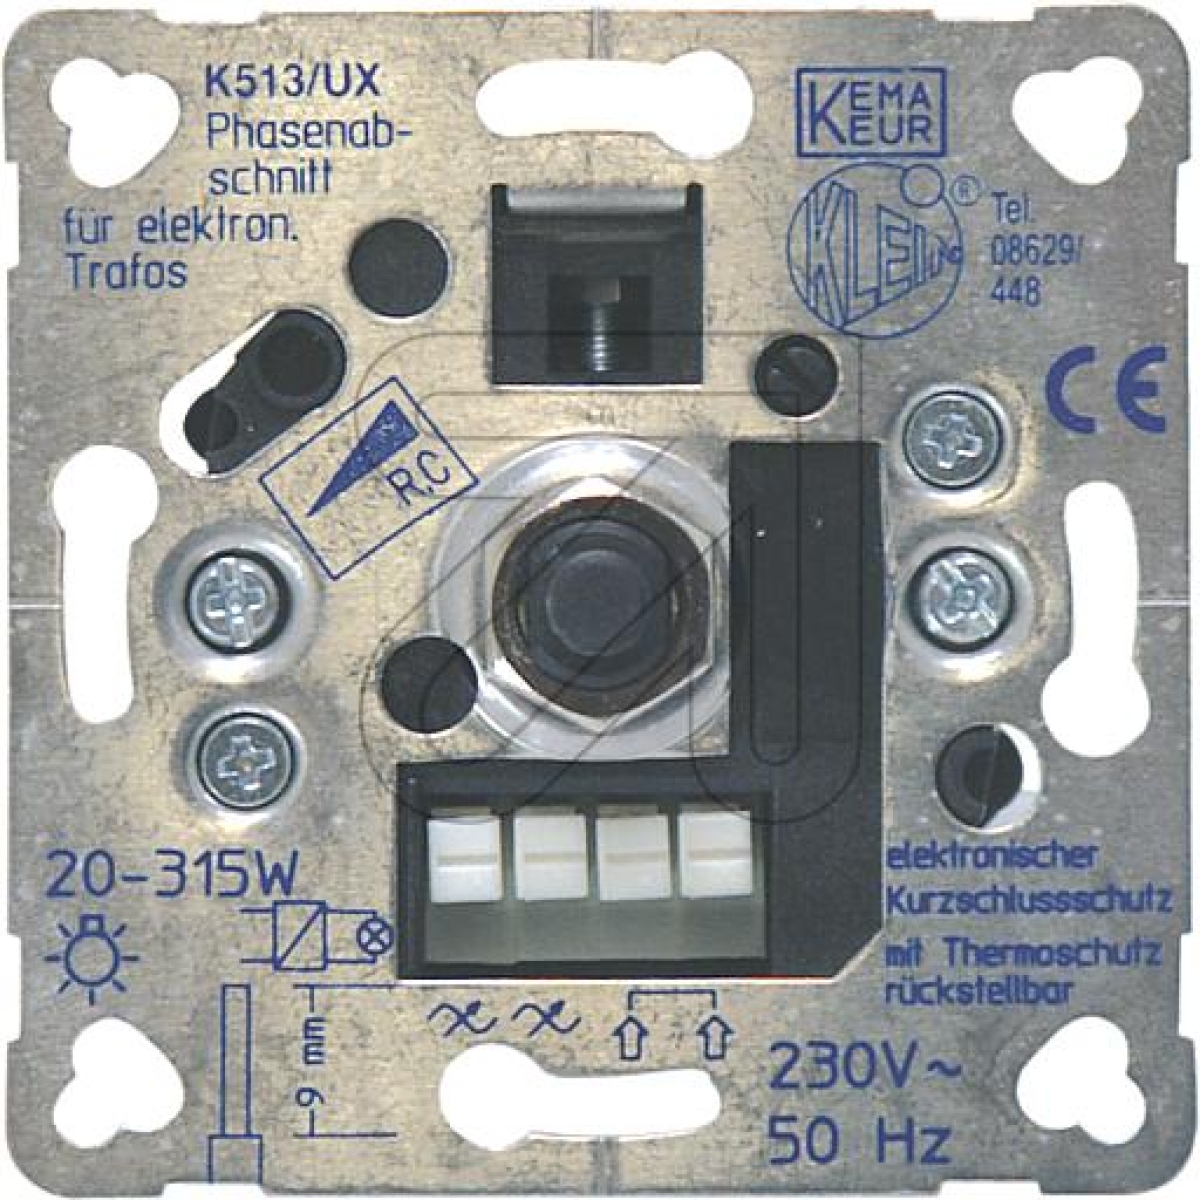 Kleintrailing edge dimmer K513/UX alternatively: 100669Article-No: 090280